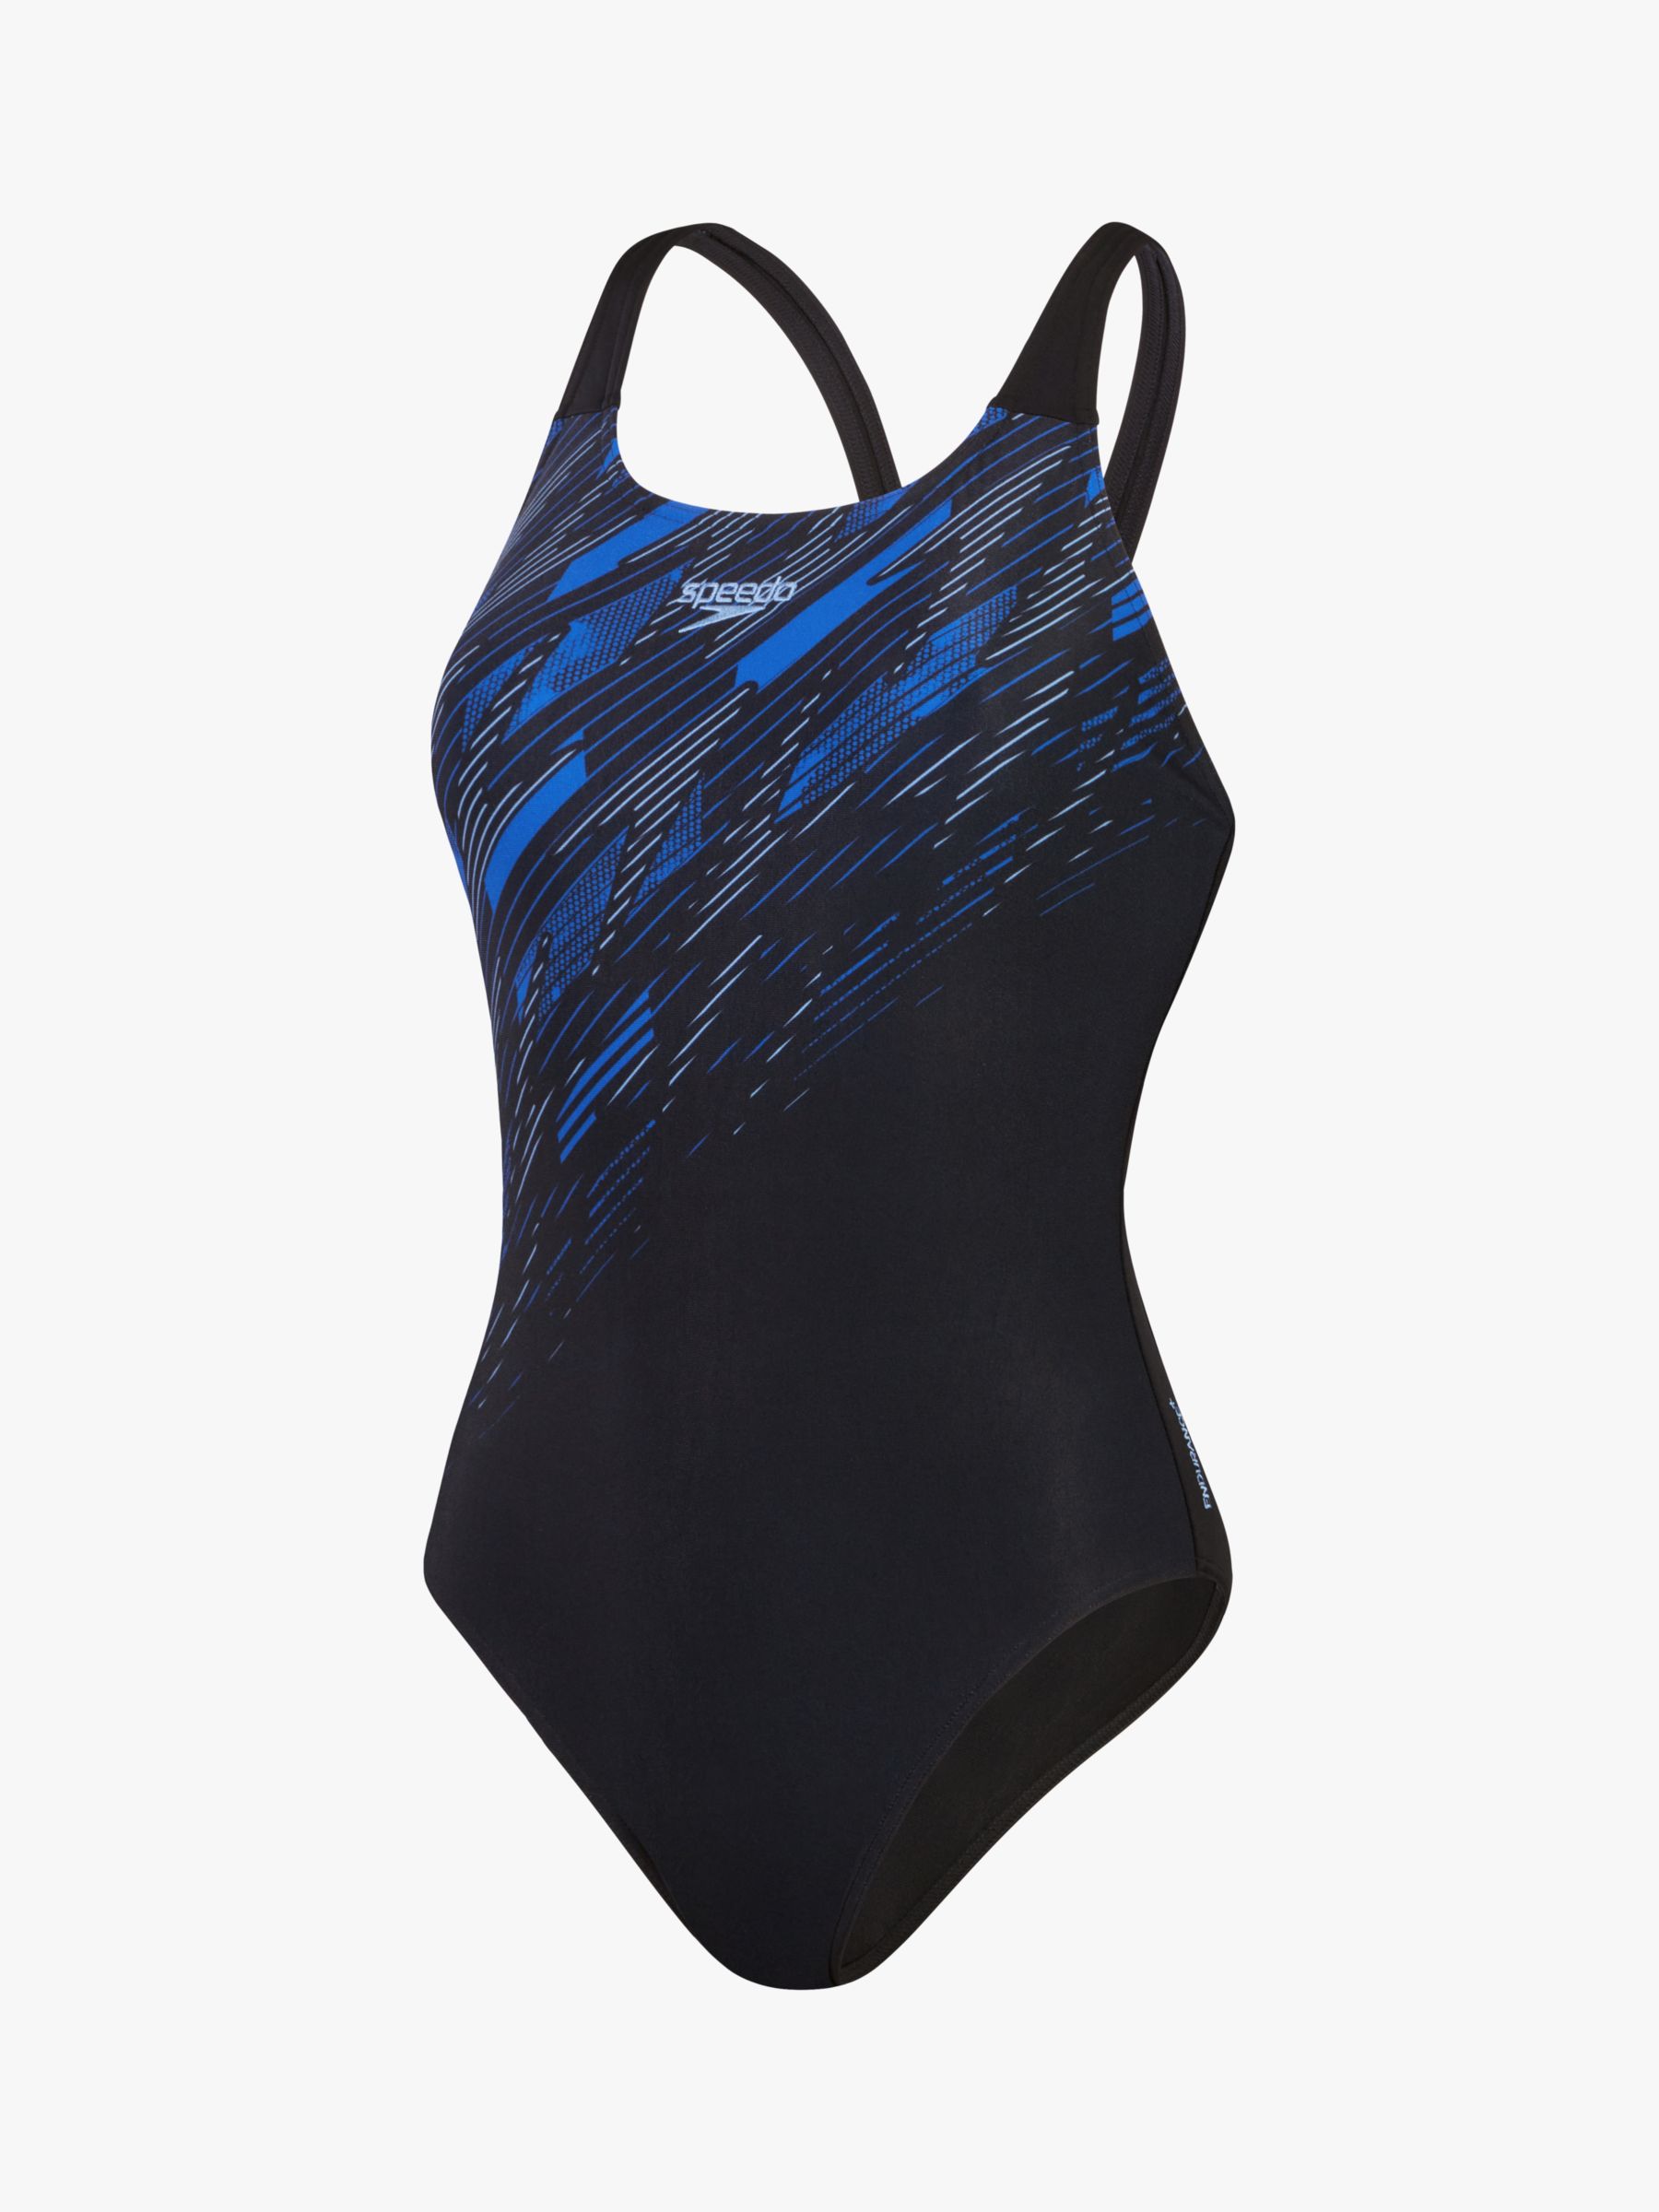 Speedo Hyper Placement Muscleback Swimsuit, Black/Cobalt, 40